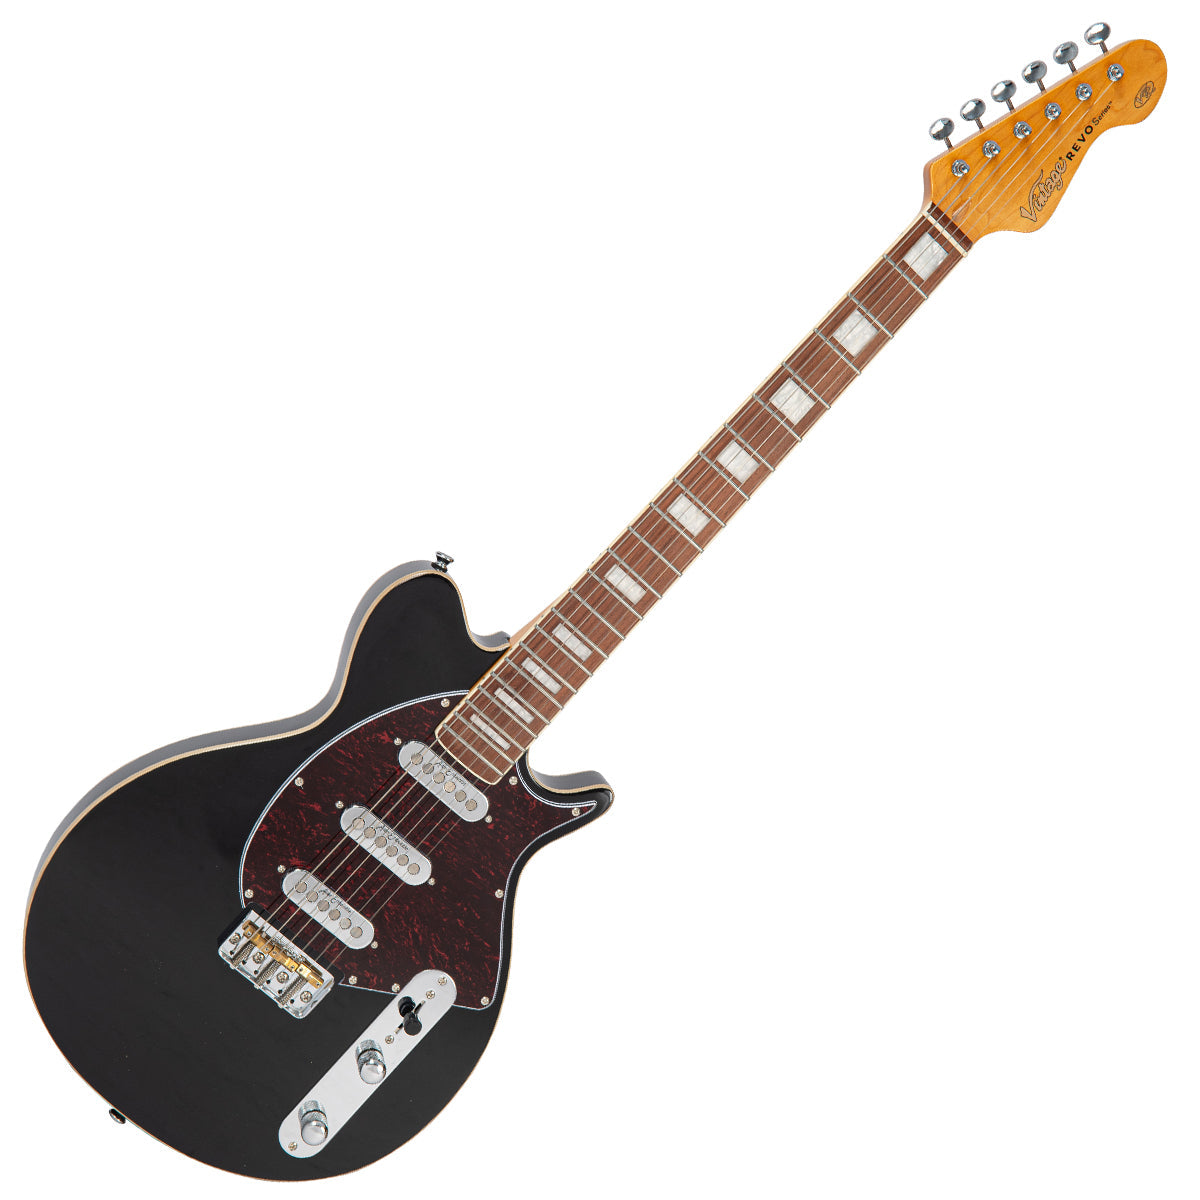 Vintage REVO Series 'Vision' Electric Guitar ~ Boulevard Black, Electric Guitars for sale at Richards Guitars.